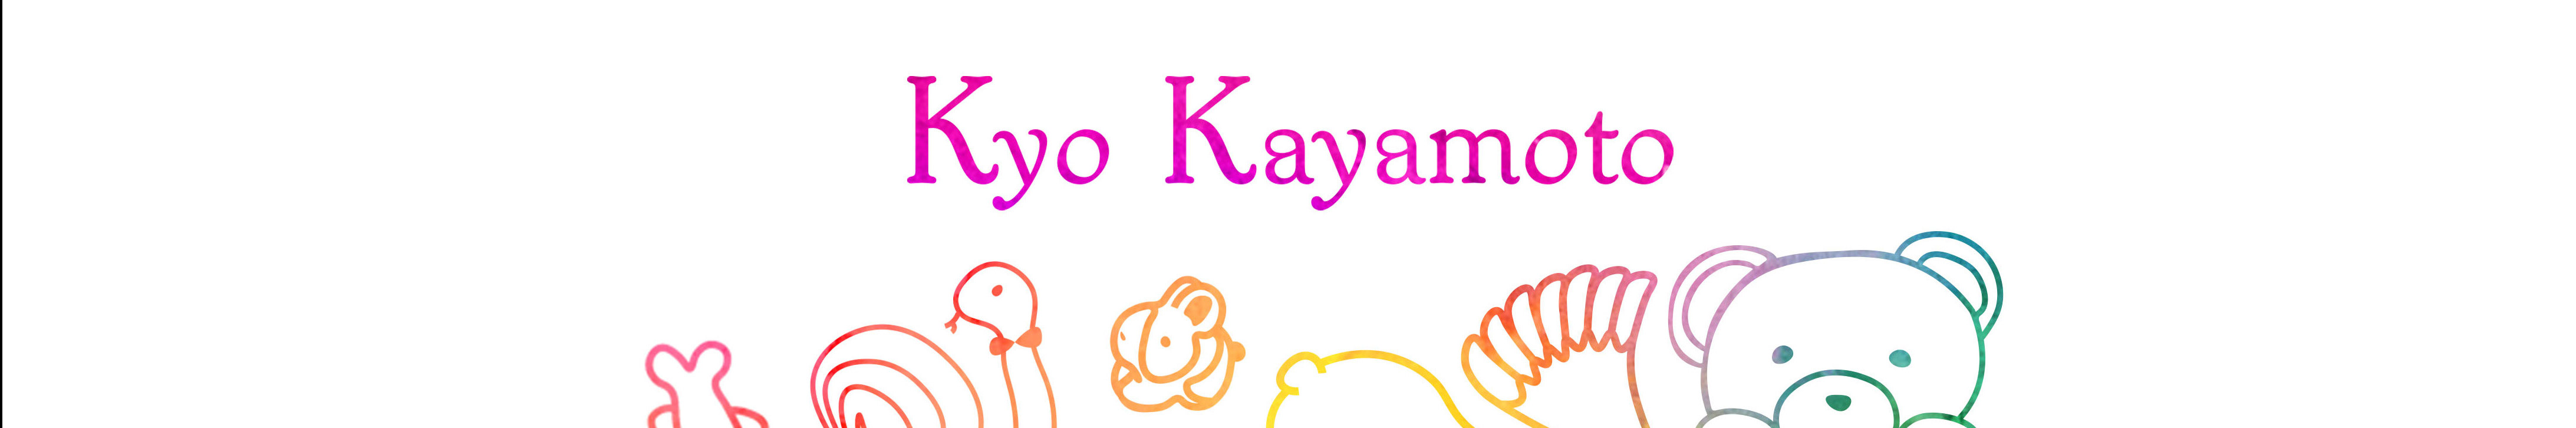 kyo kayamoto's profile banner